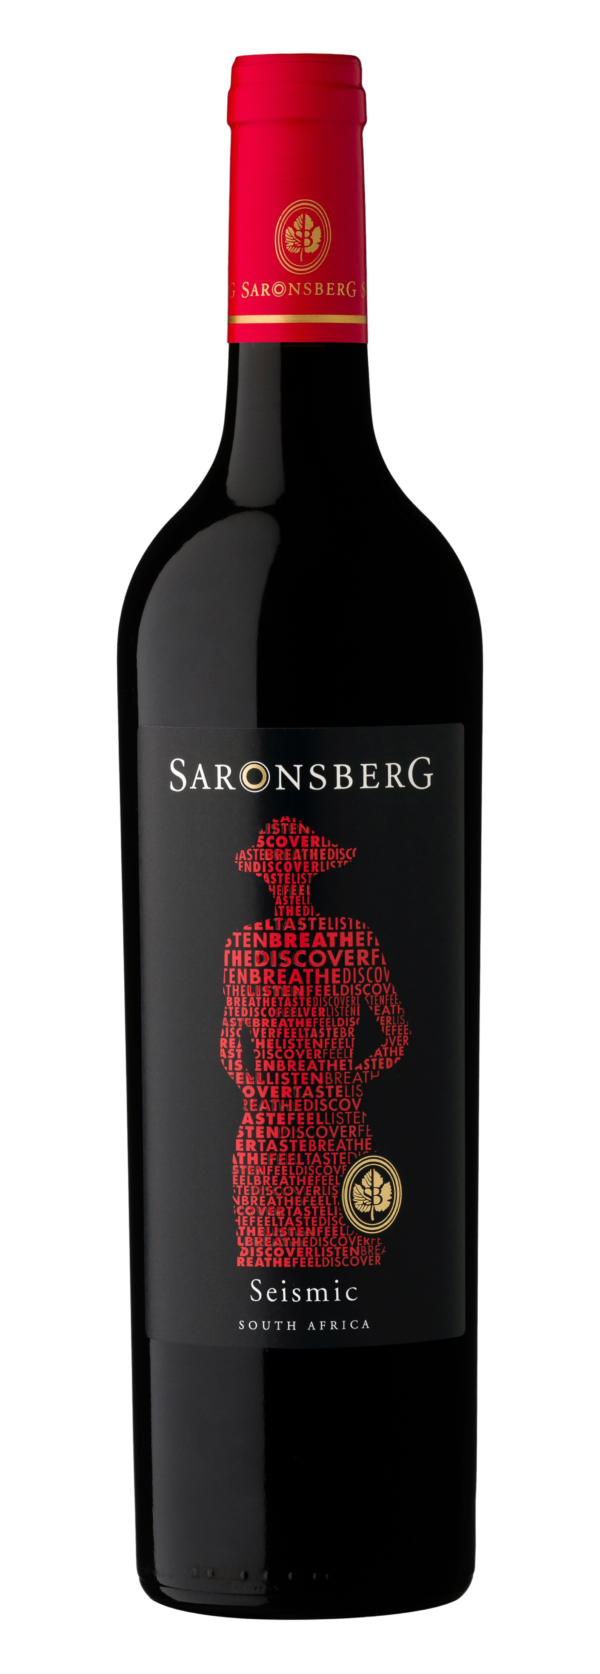 A Saronsberg Siesmic bottle